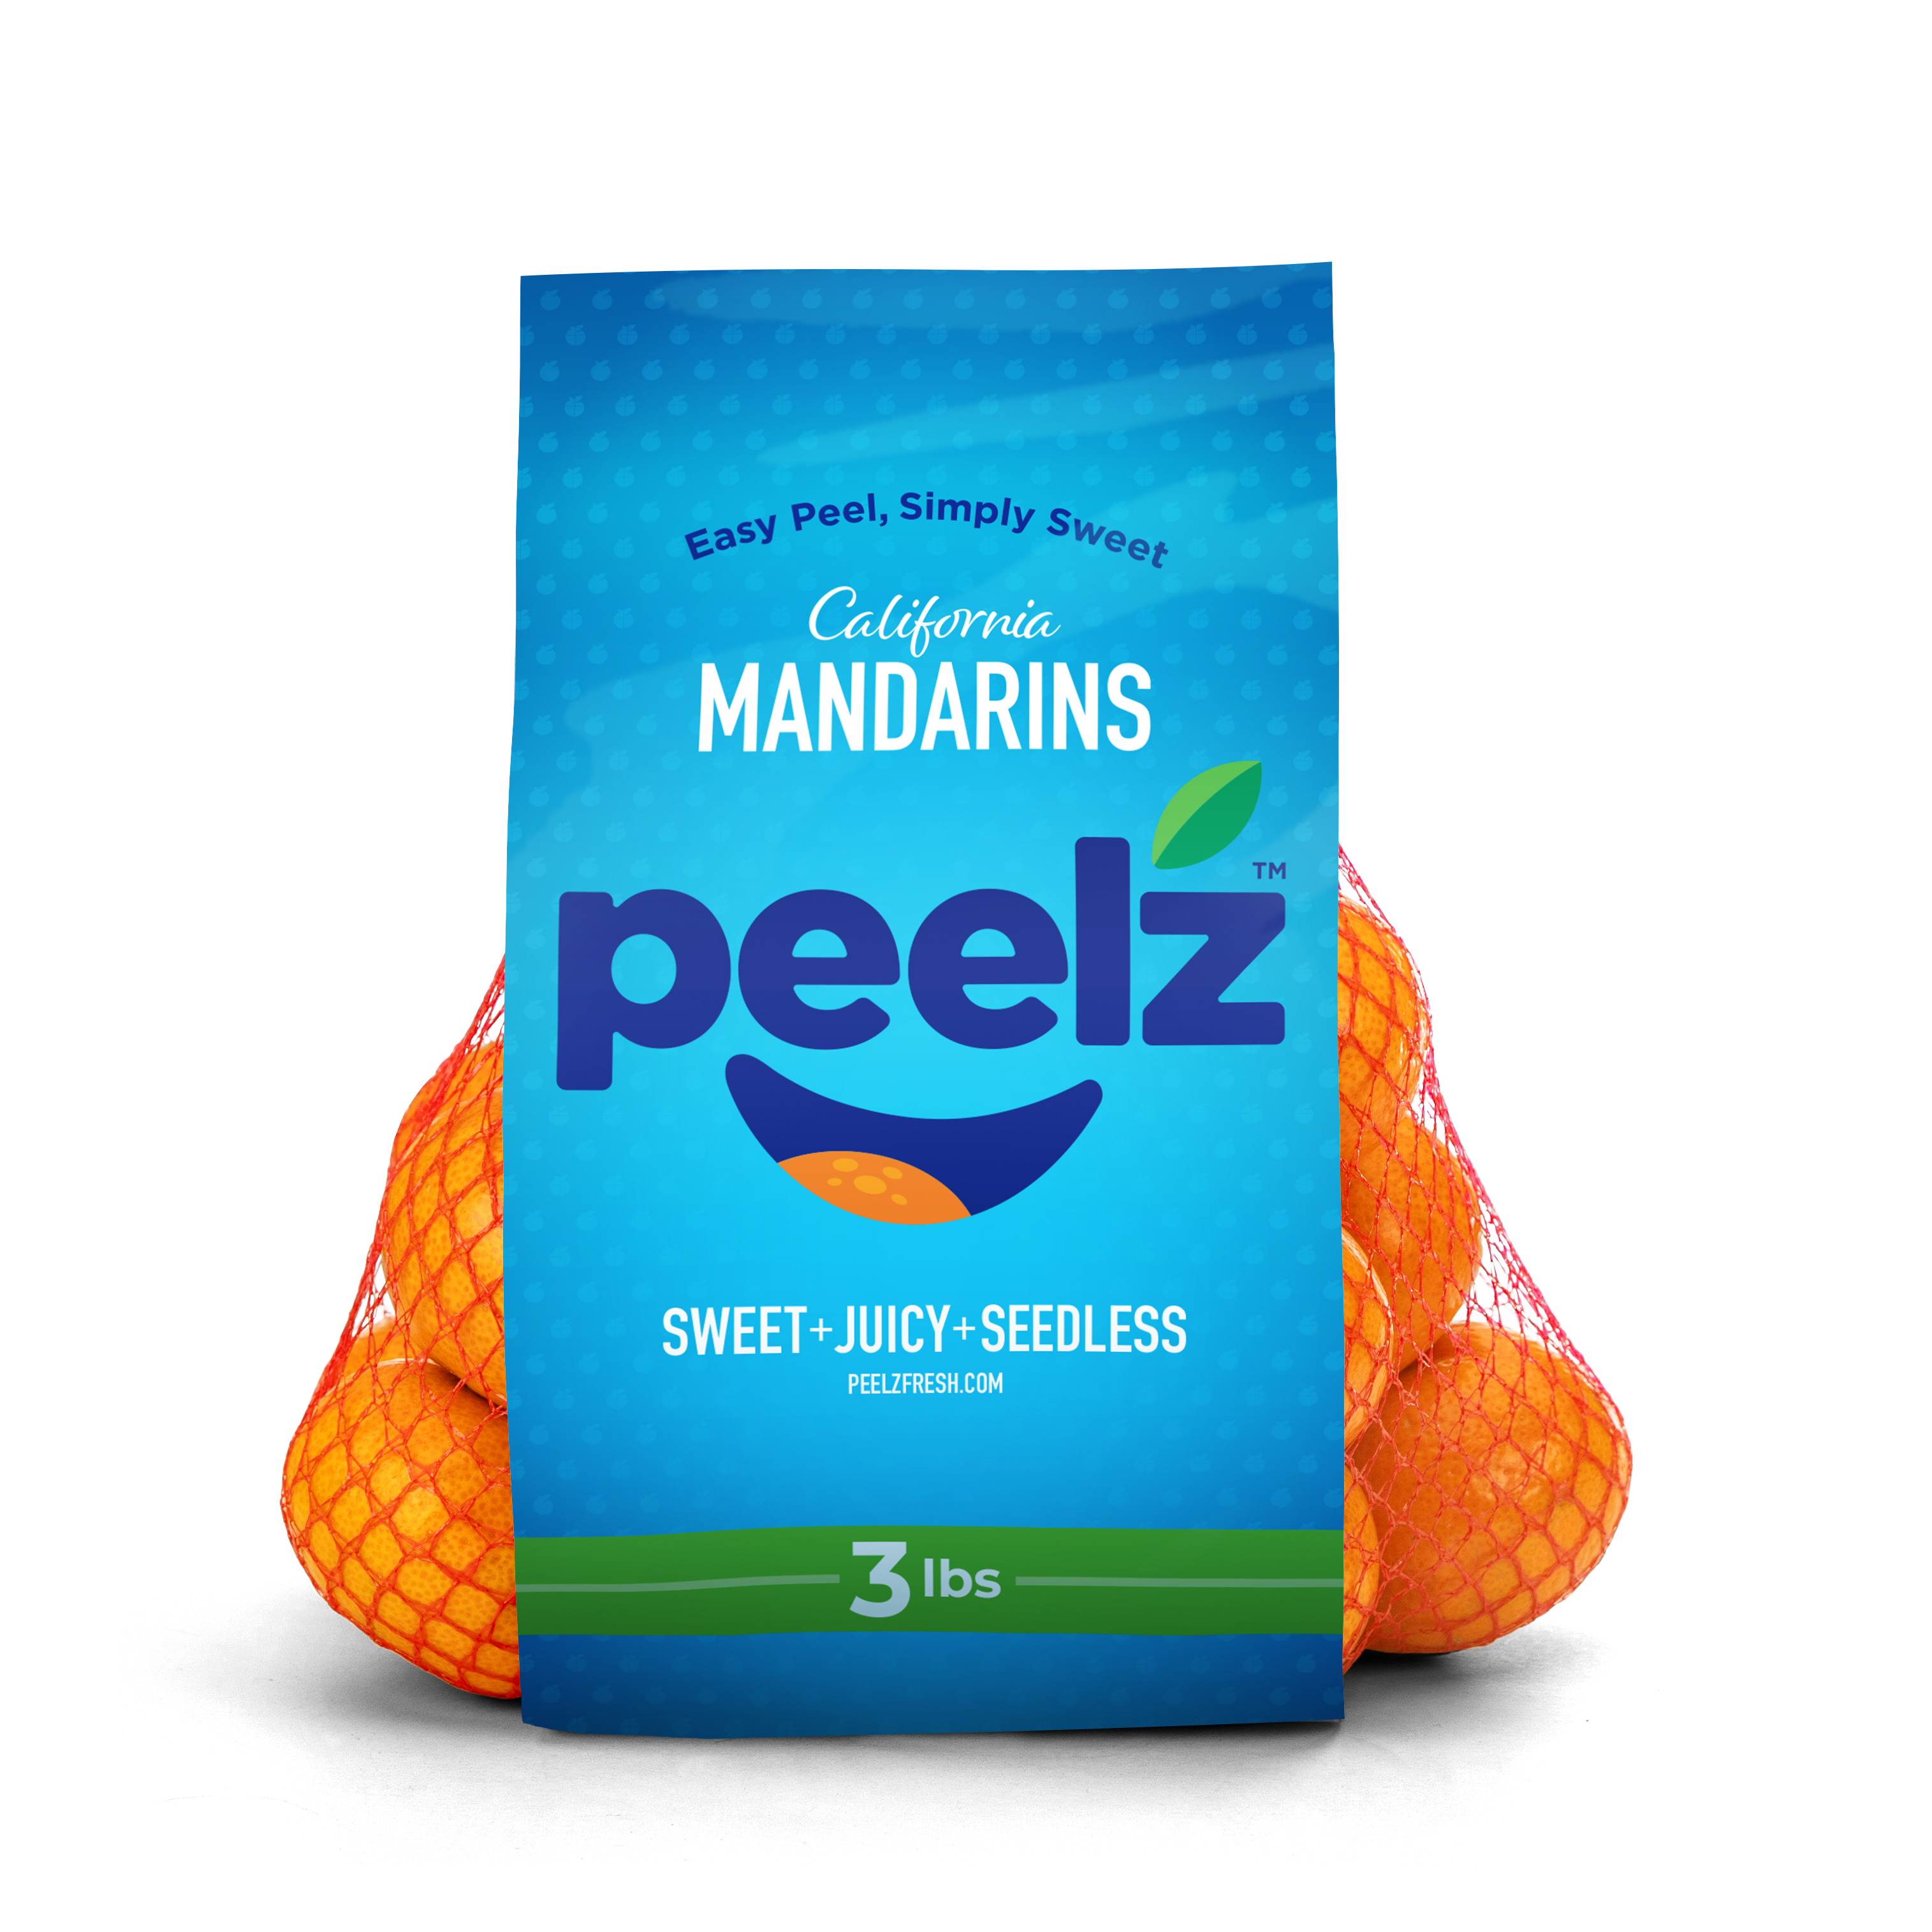 Peelz mandarin bag packaging